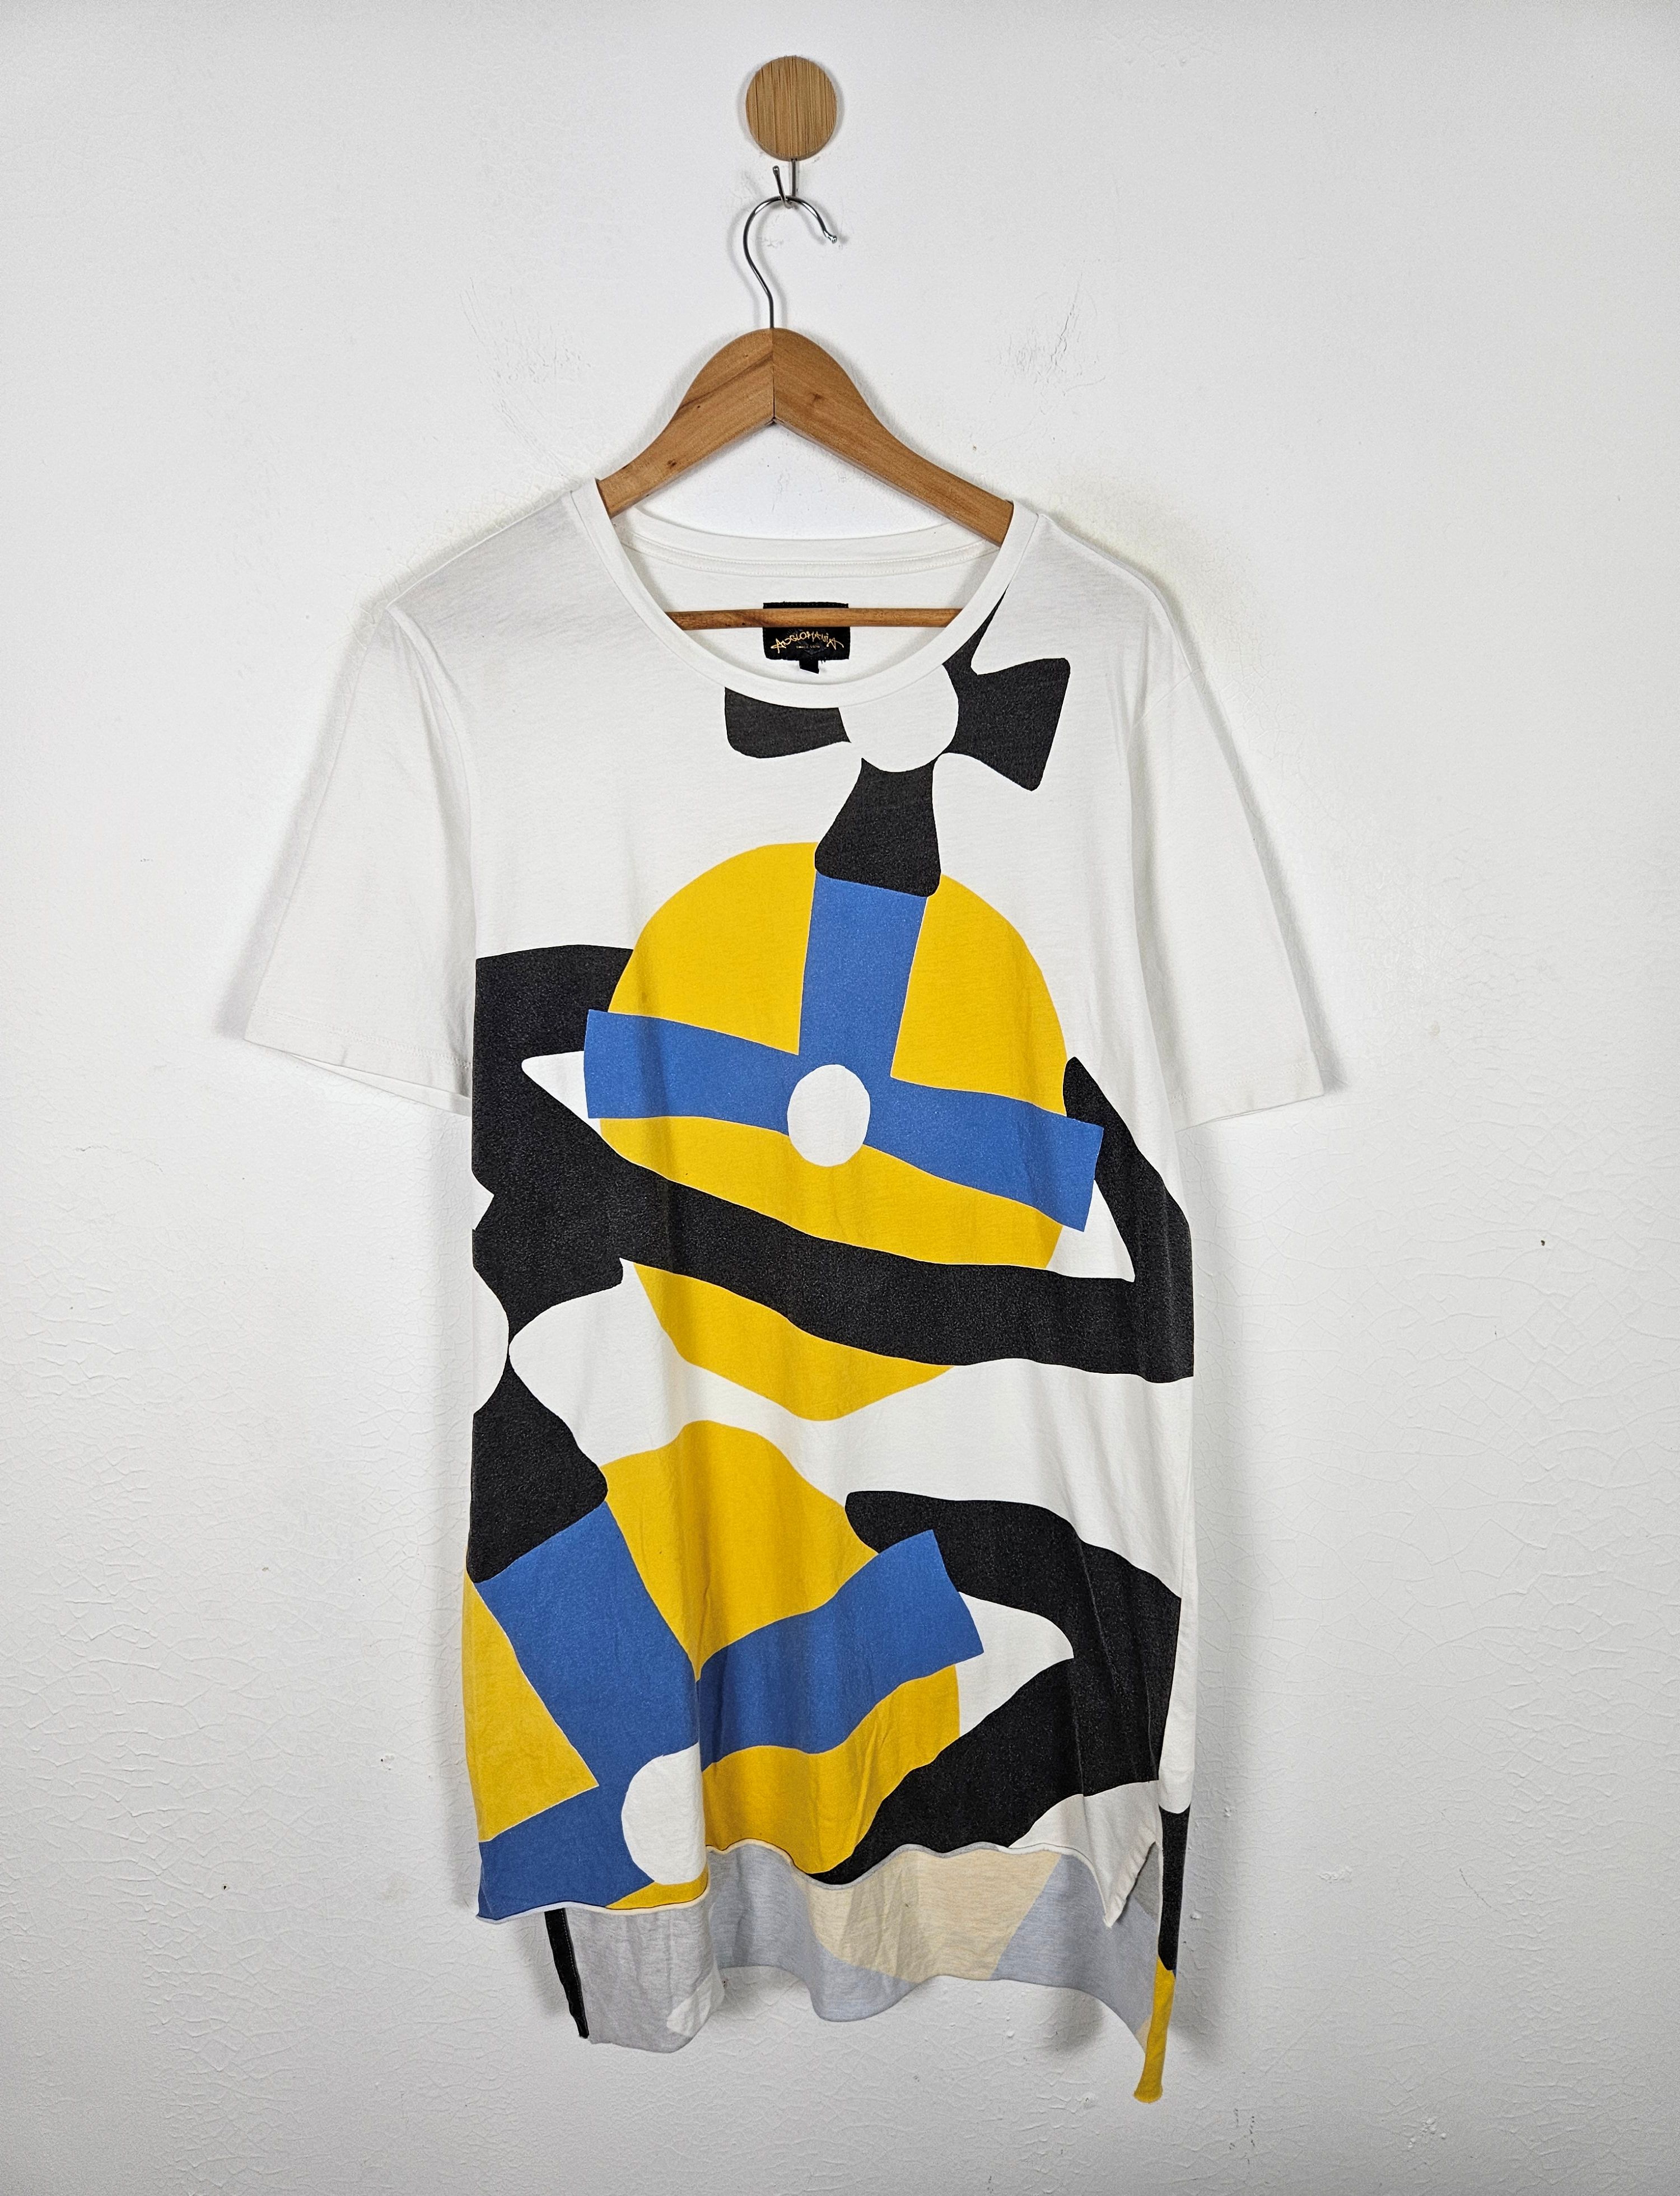 Vivienne Westwood Anglomania Orb Shirt - 1